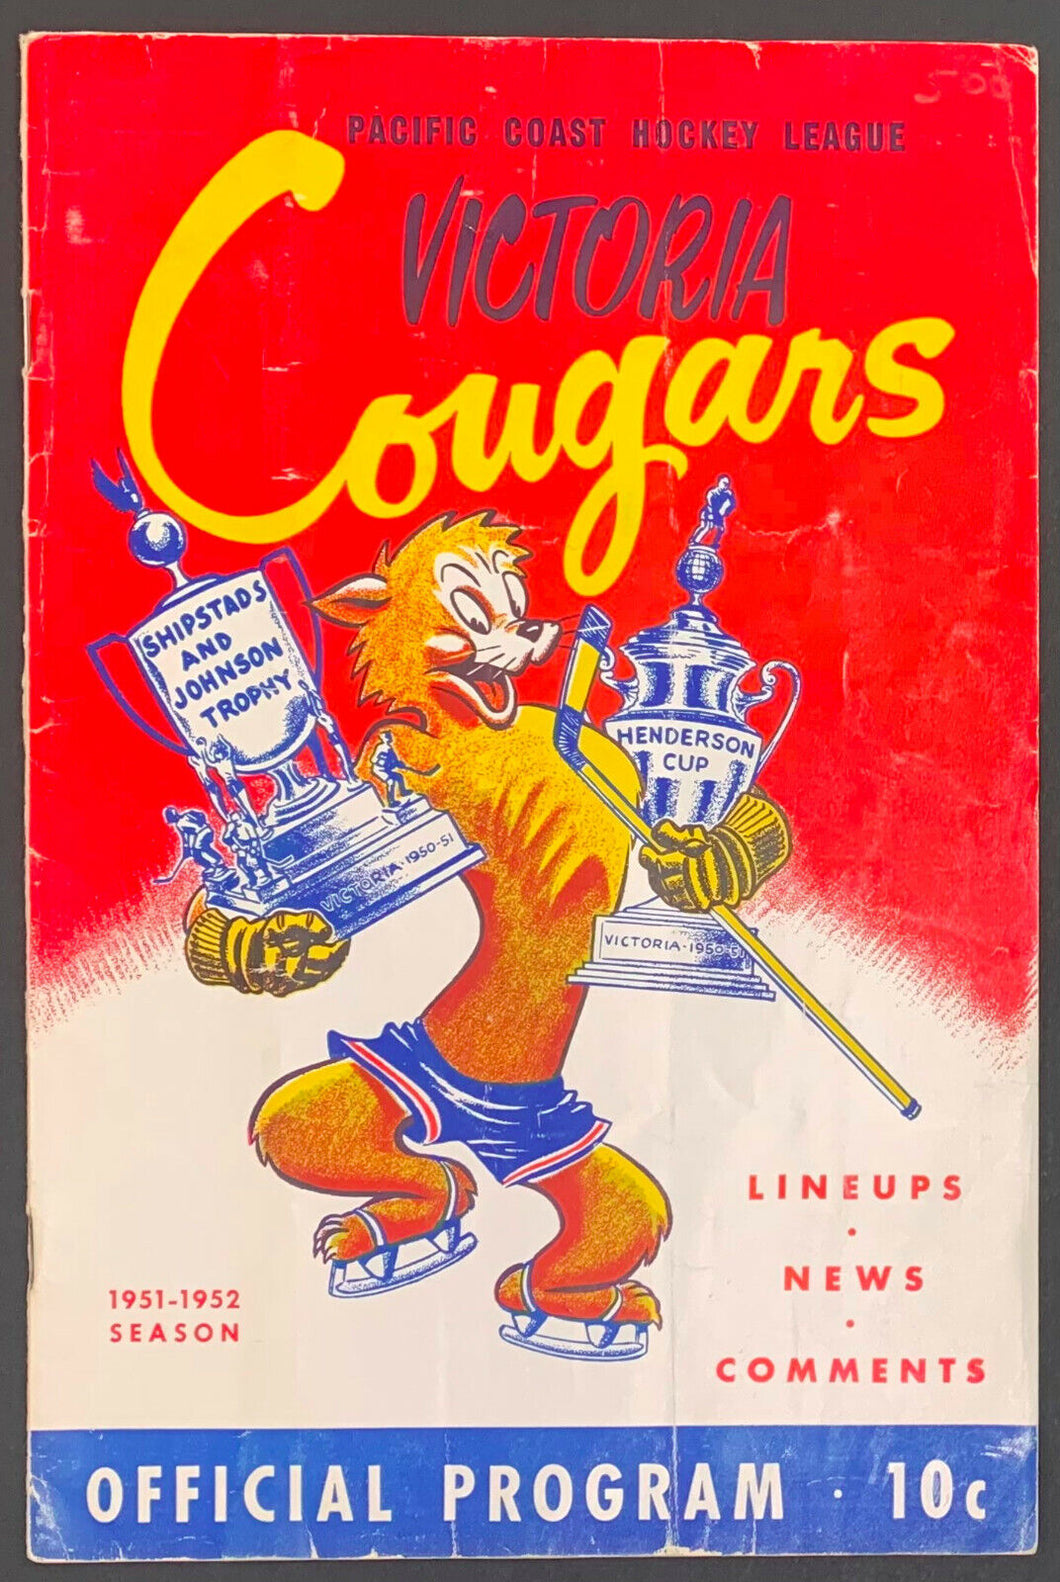 1952 Victoria Memorial Arena Pacific Coast Hockey League Playoff Program Cougars